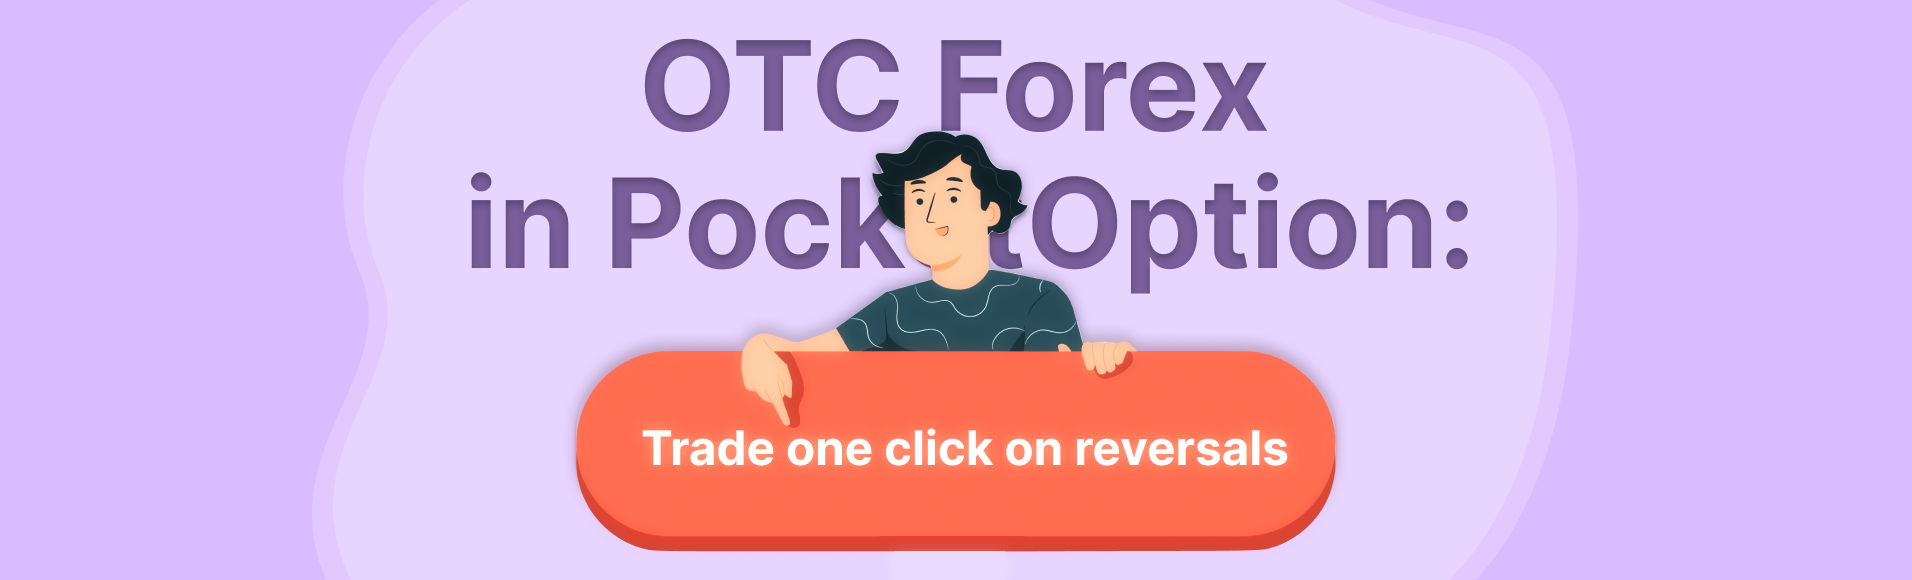 OTC Forex dalam PocketOption: berdagang satu klik pada pembalikan